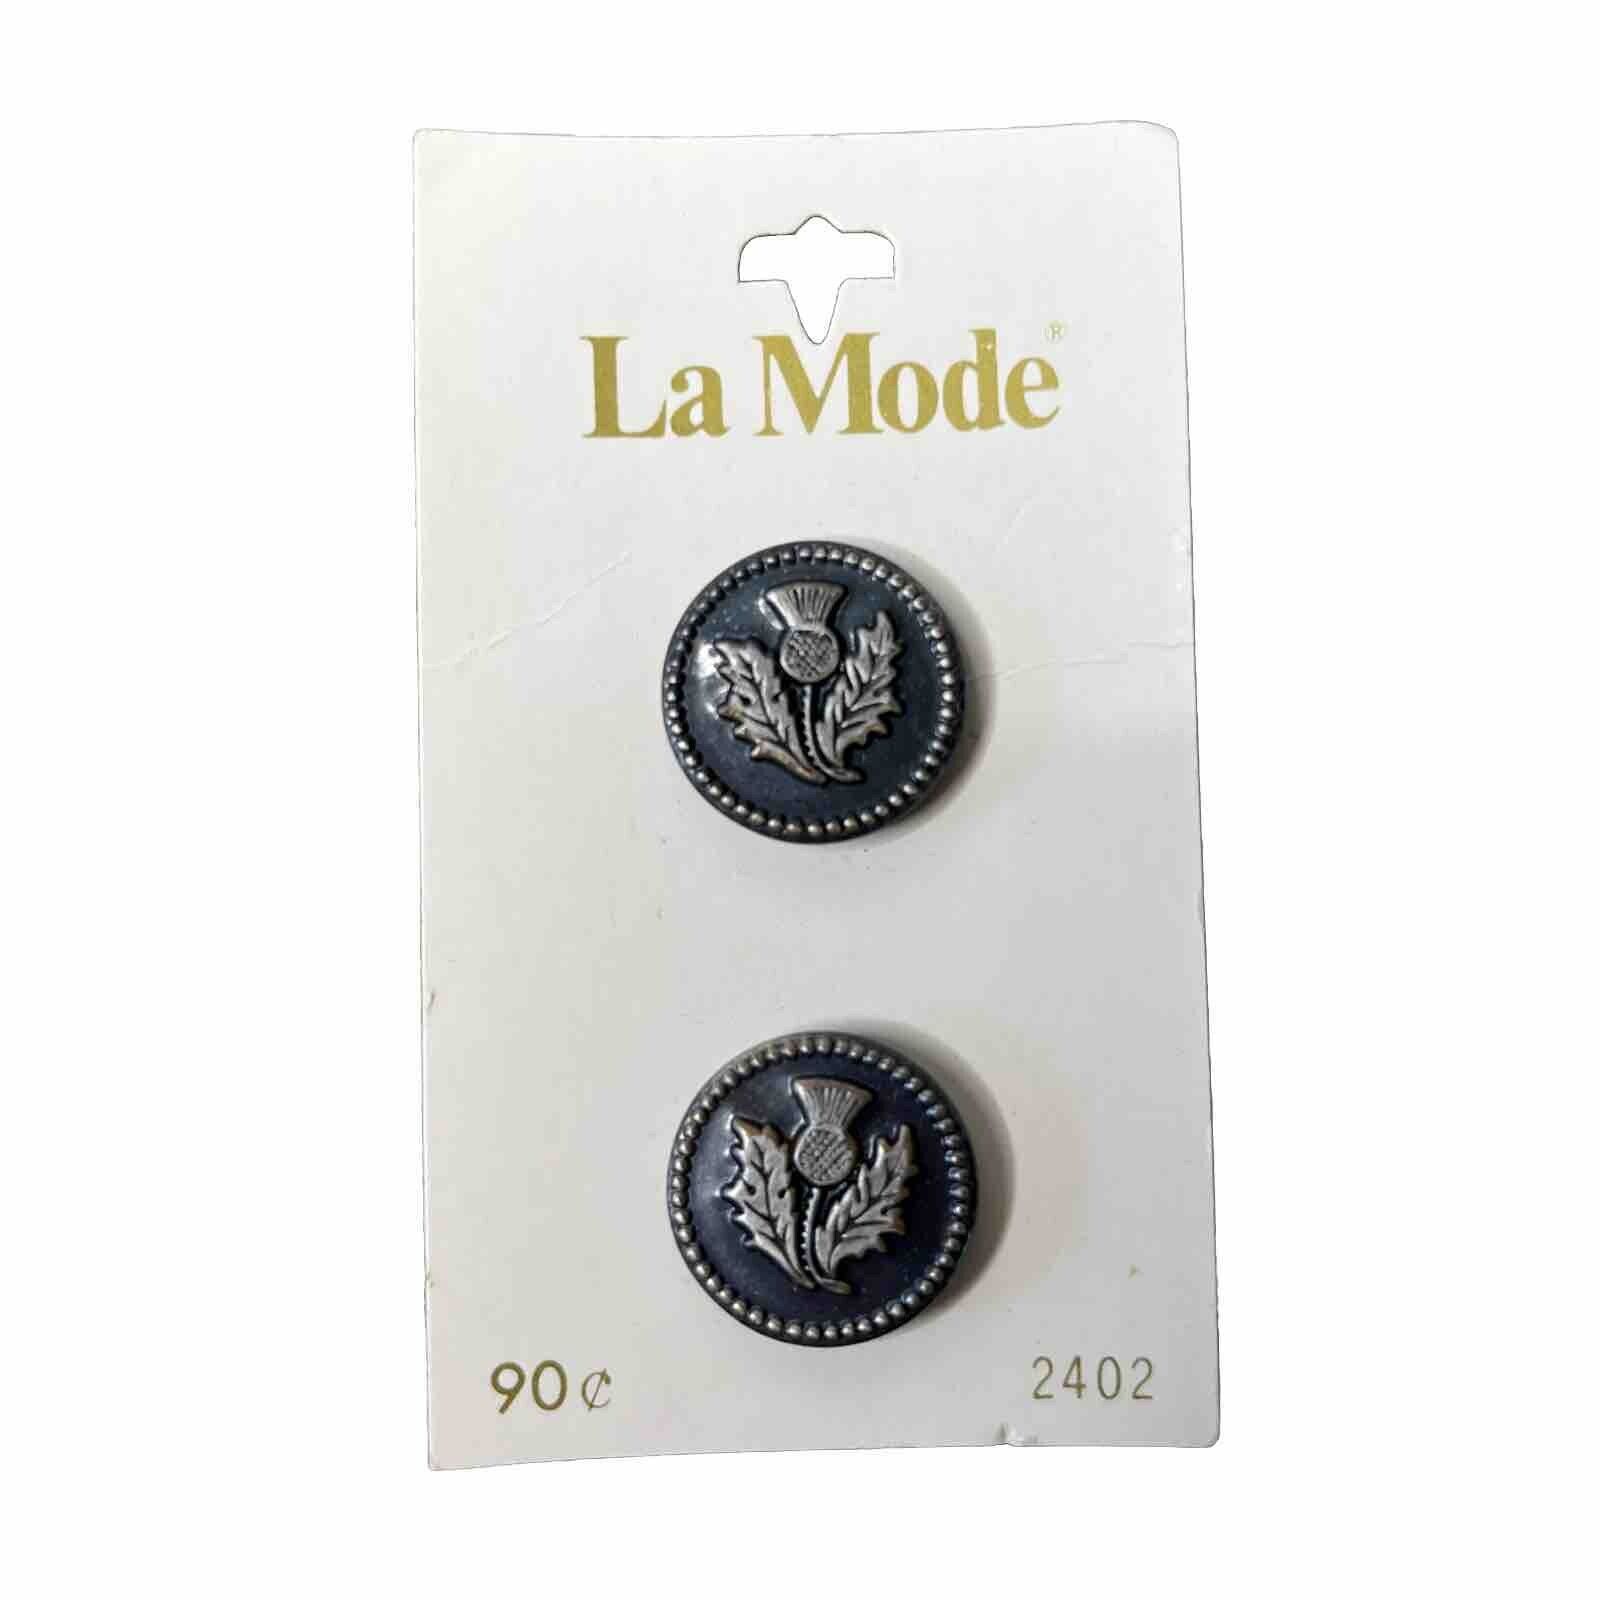 Vintage La Mode Buttons On Card Antiqued Silver No. 2402 Size 30 (3/4”)